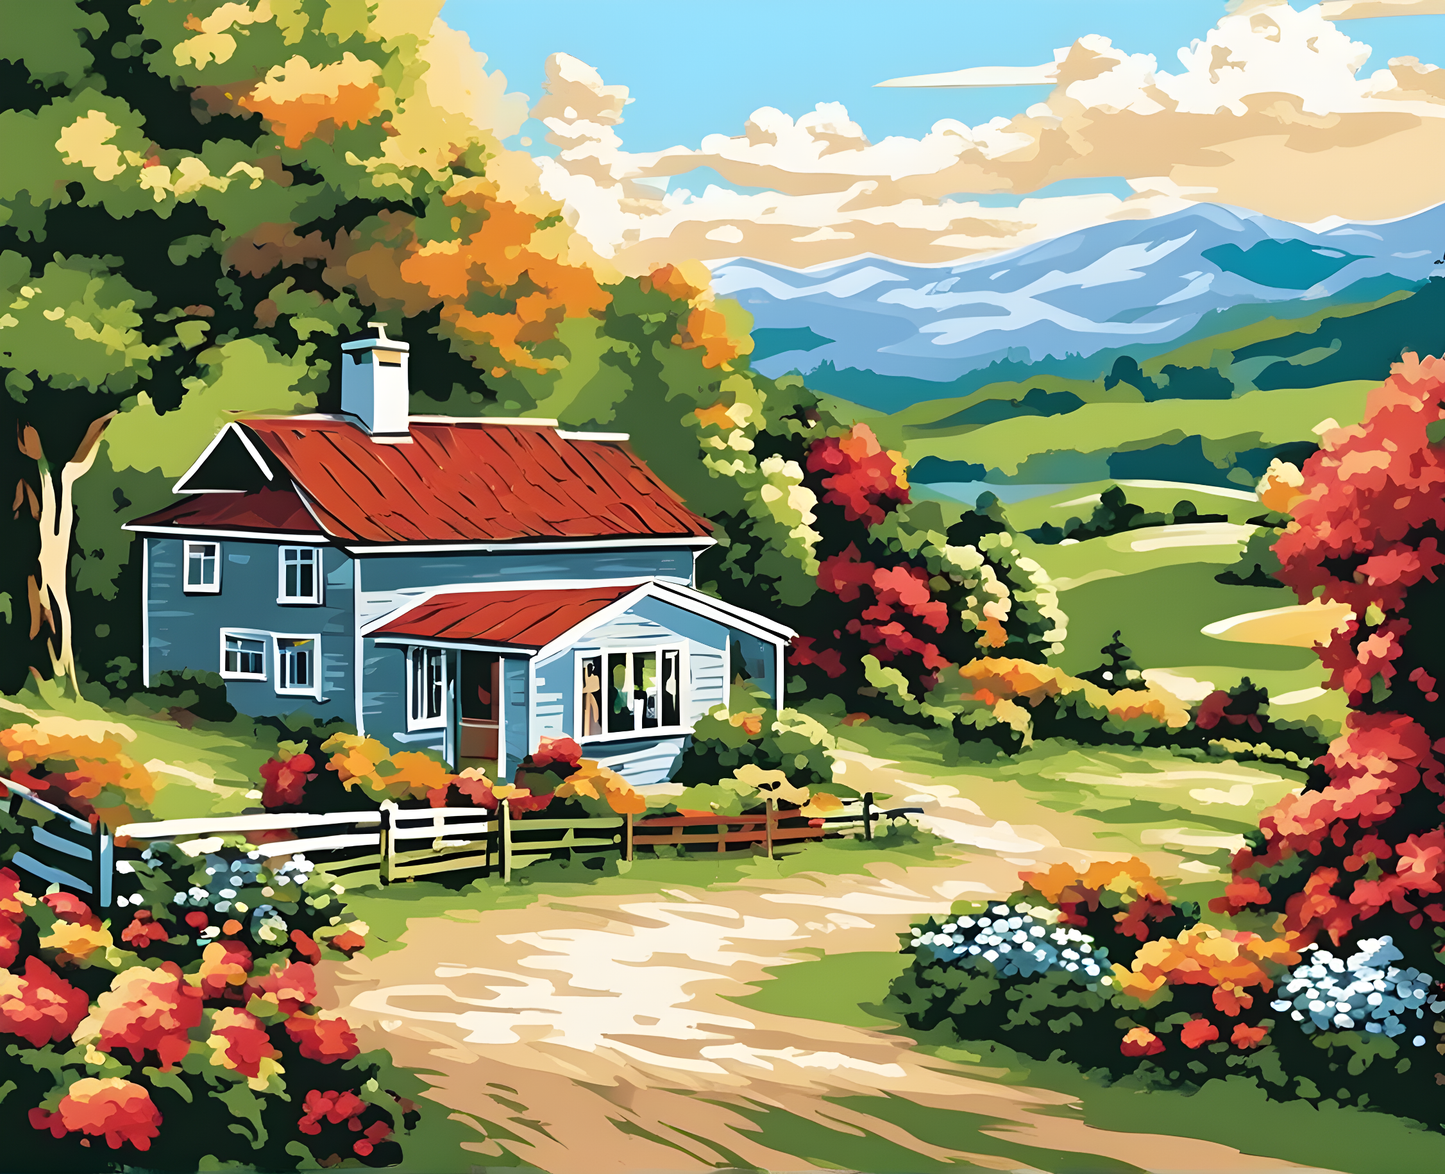 Rural Landscape - Van-Go Paint-By-Number Kit